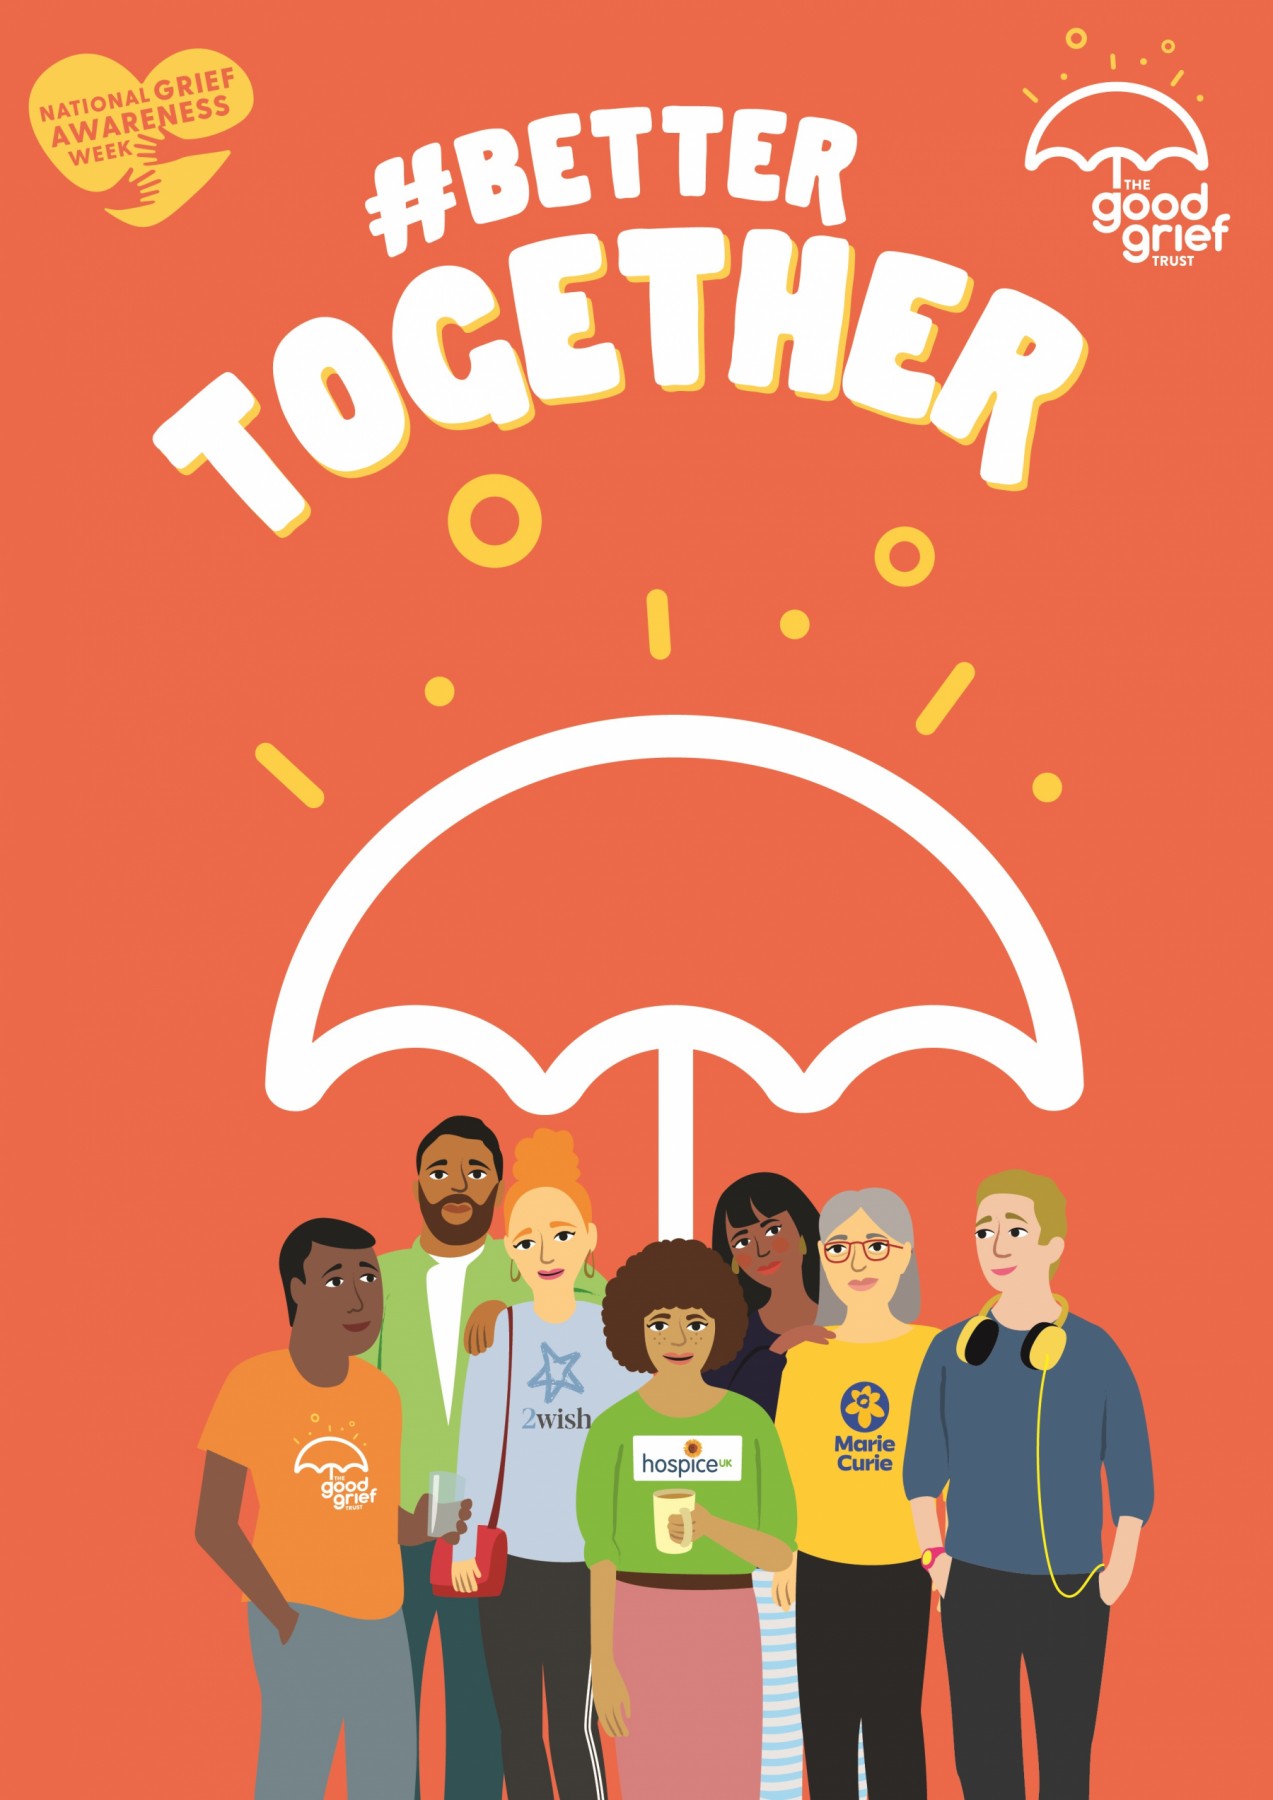 Better together - national grief awareness week (A4 poster)